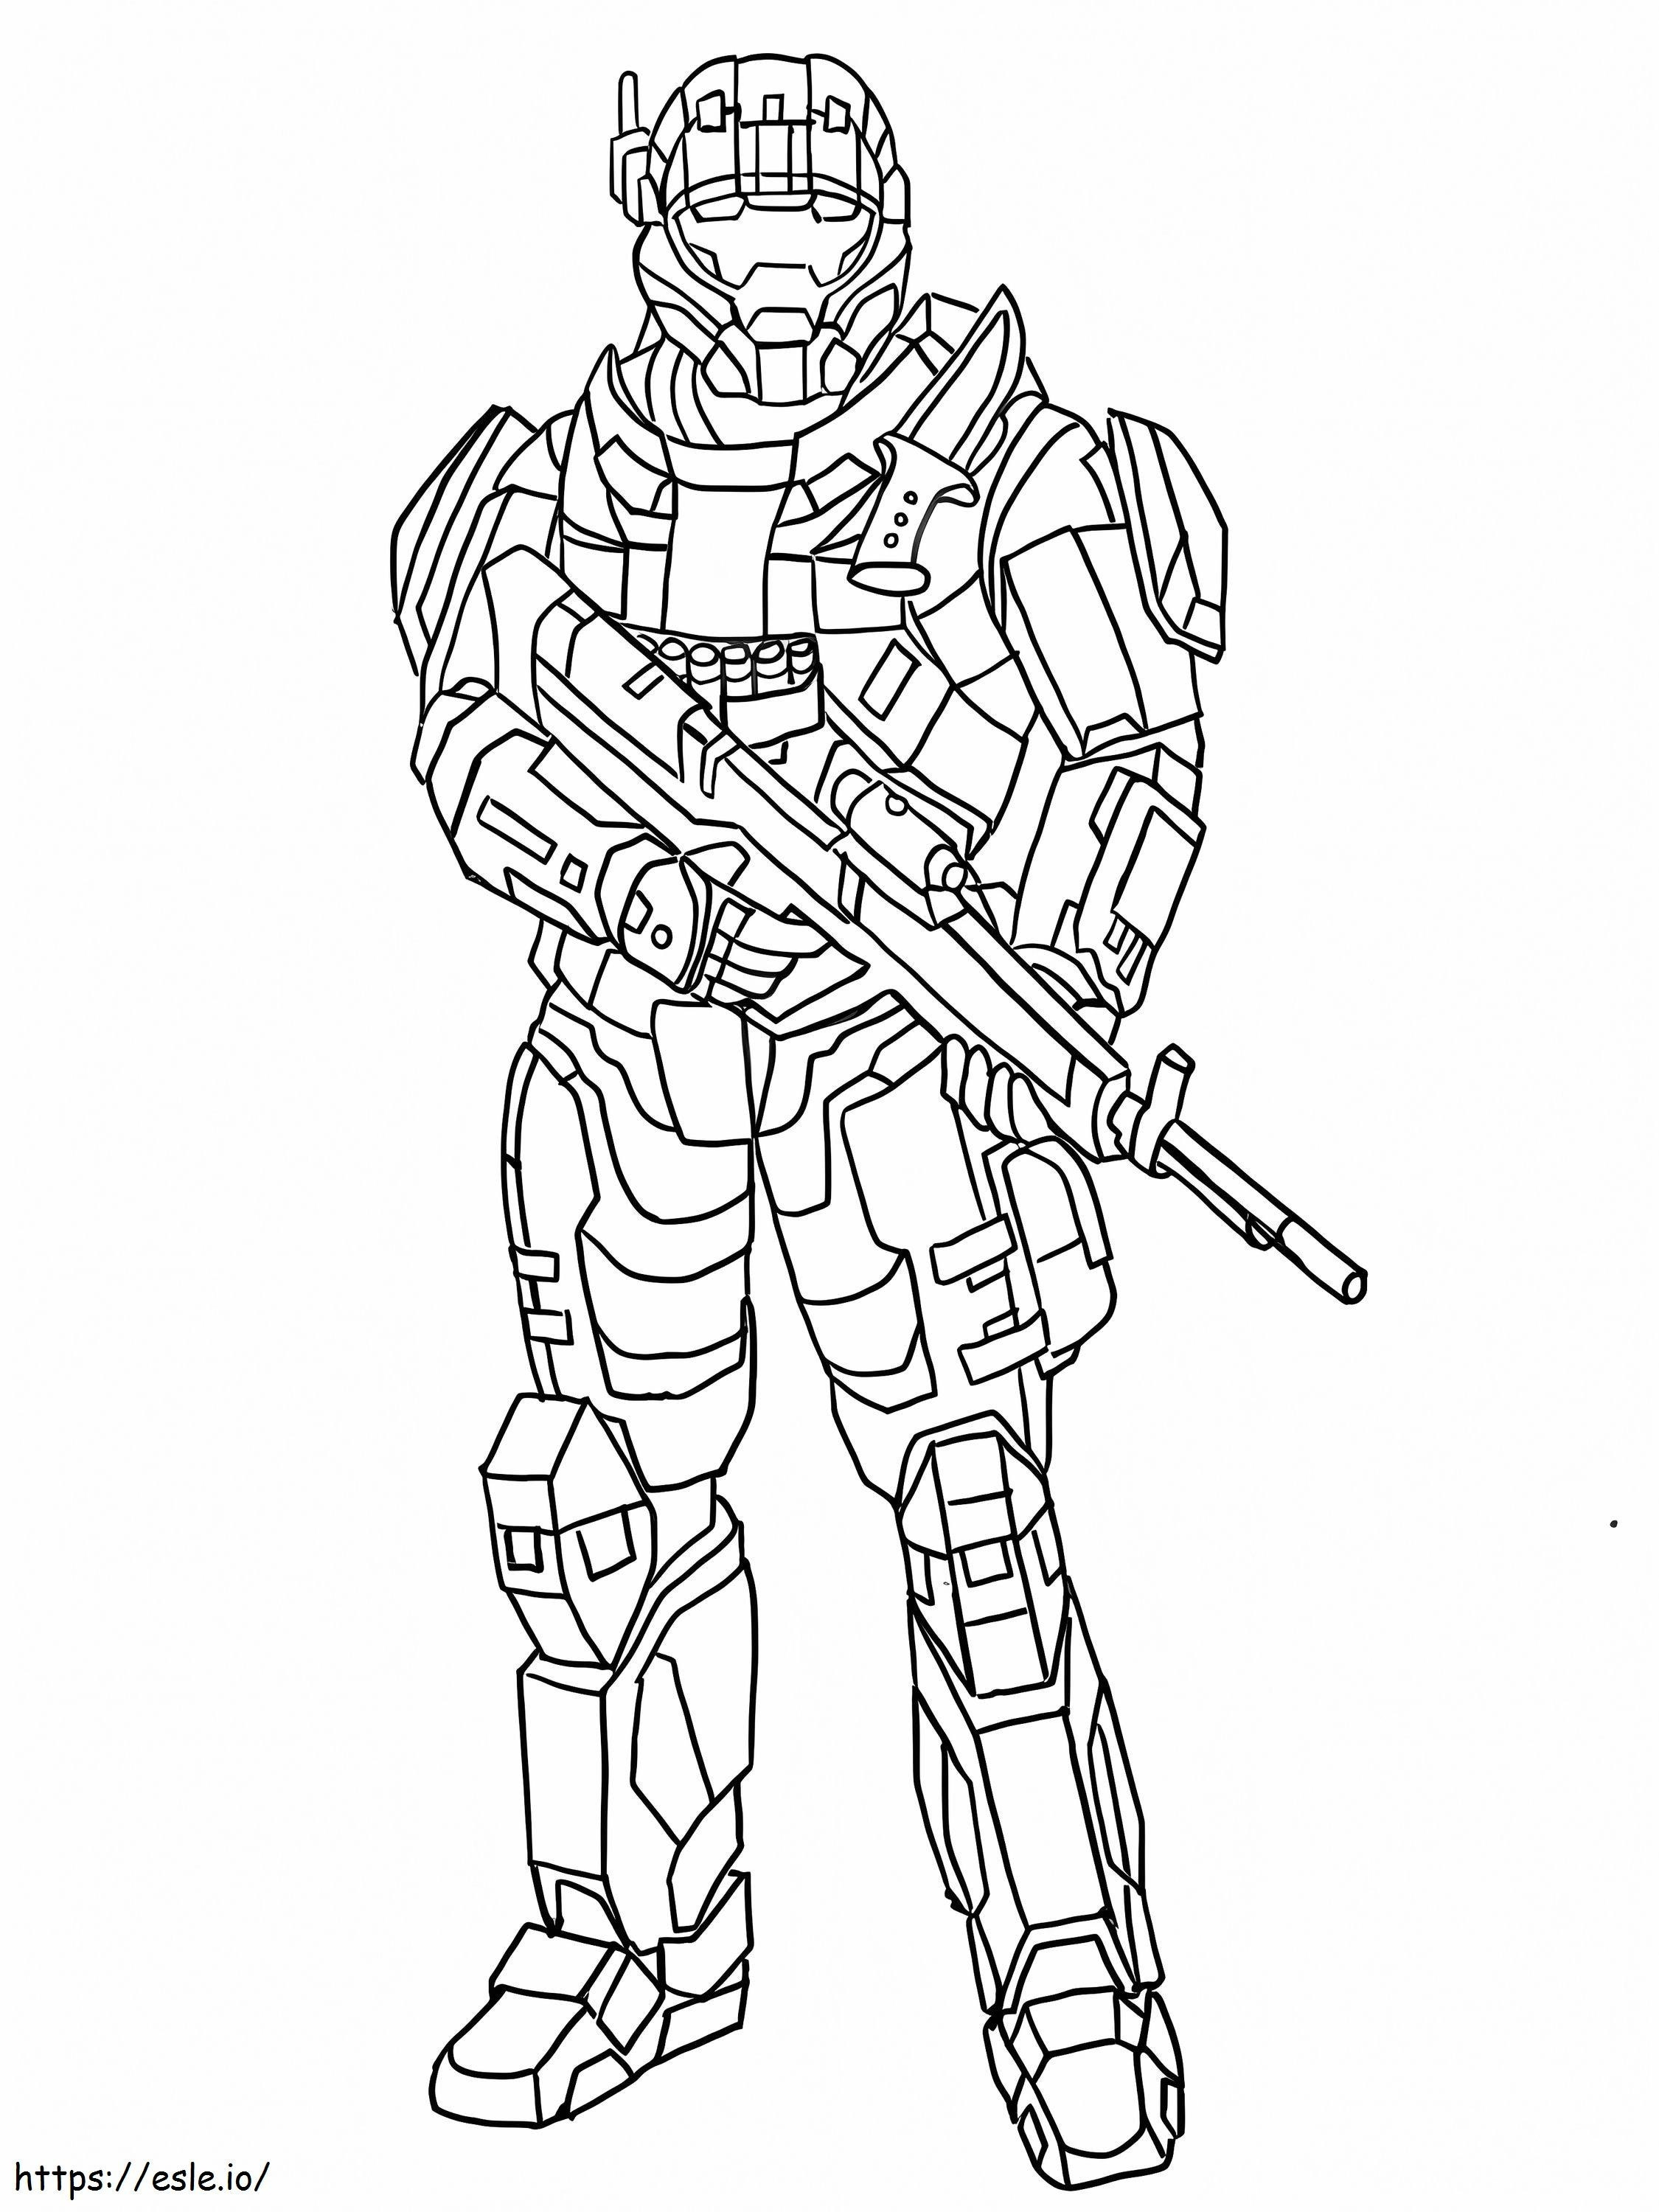 Halo-Soldat ausmalbilder